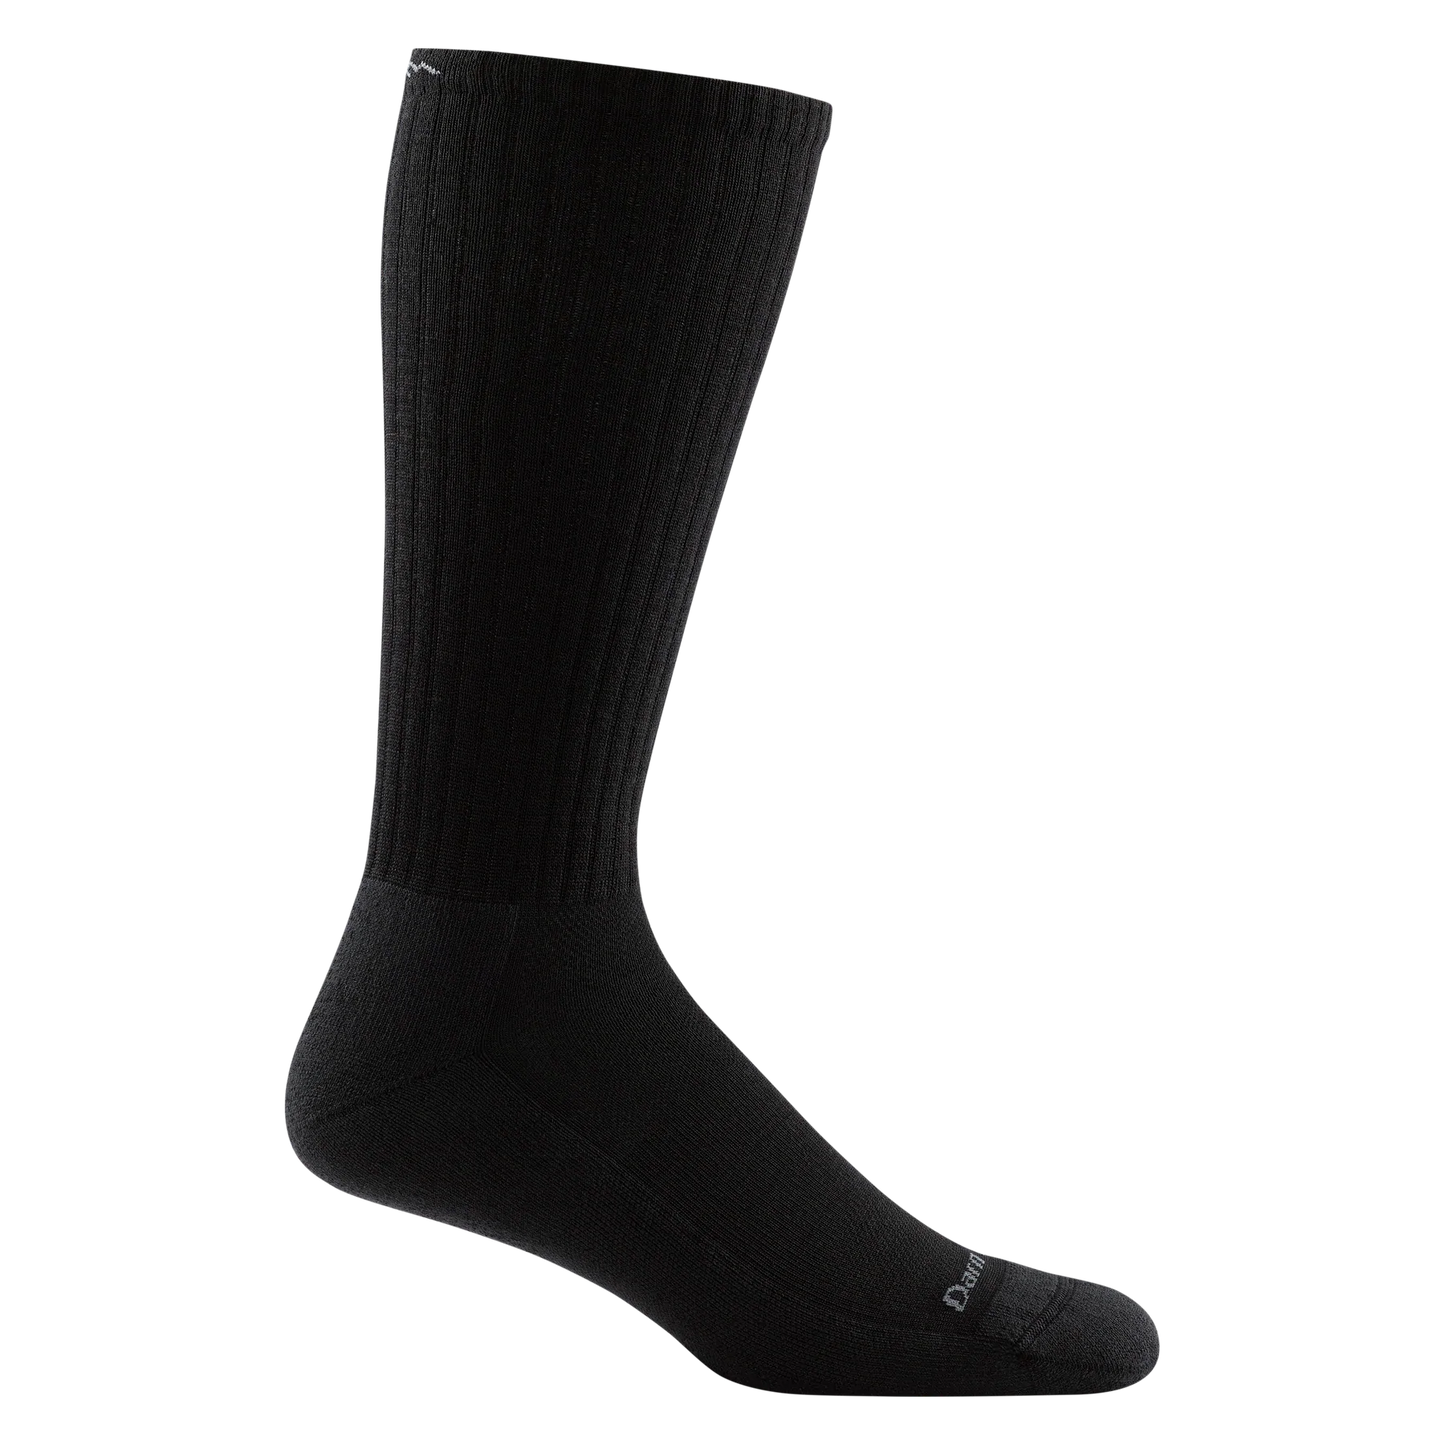 Darn Tough Lifestyle - Men's The Standard Mid-Calf Lightweight Lifestyle Sock